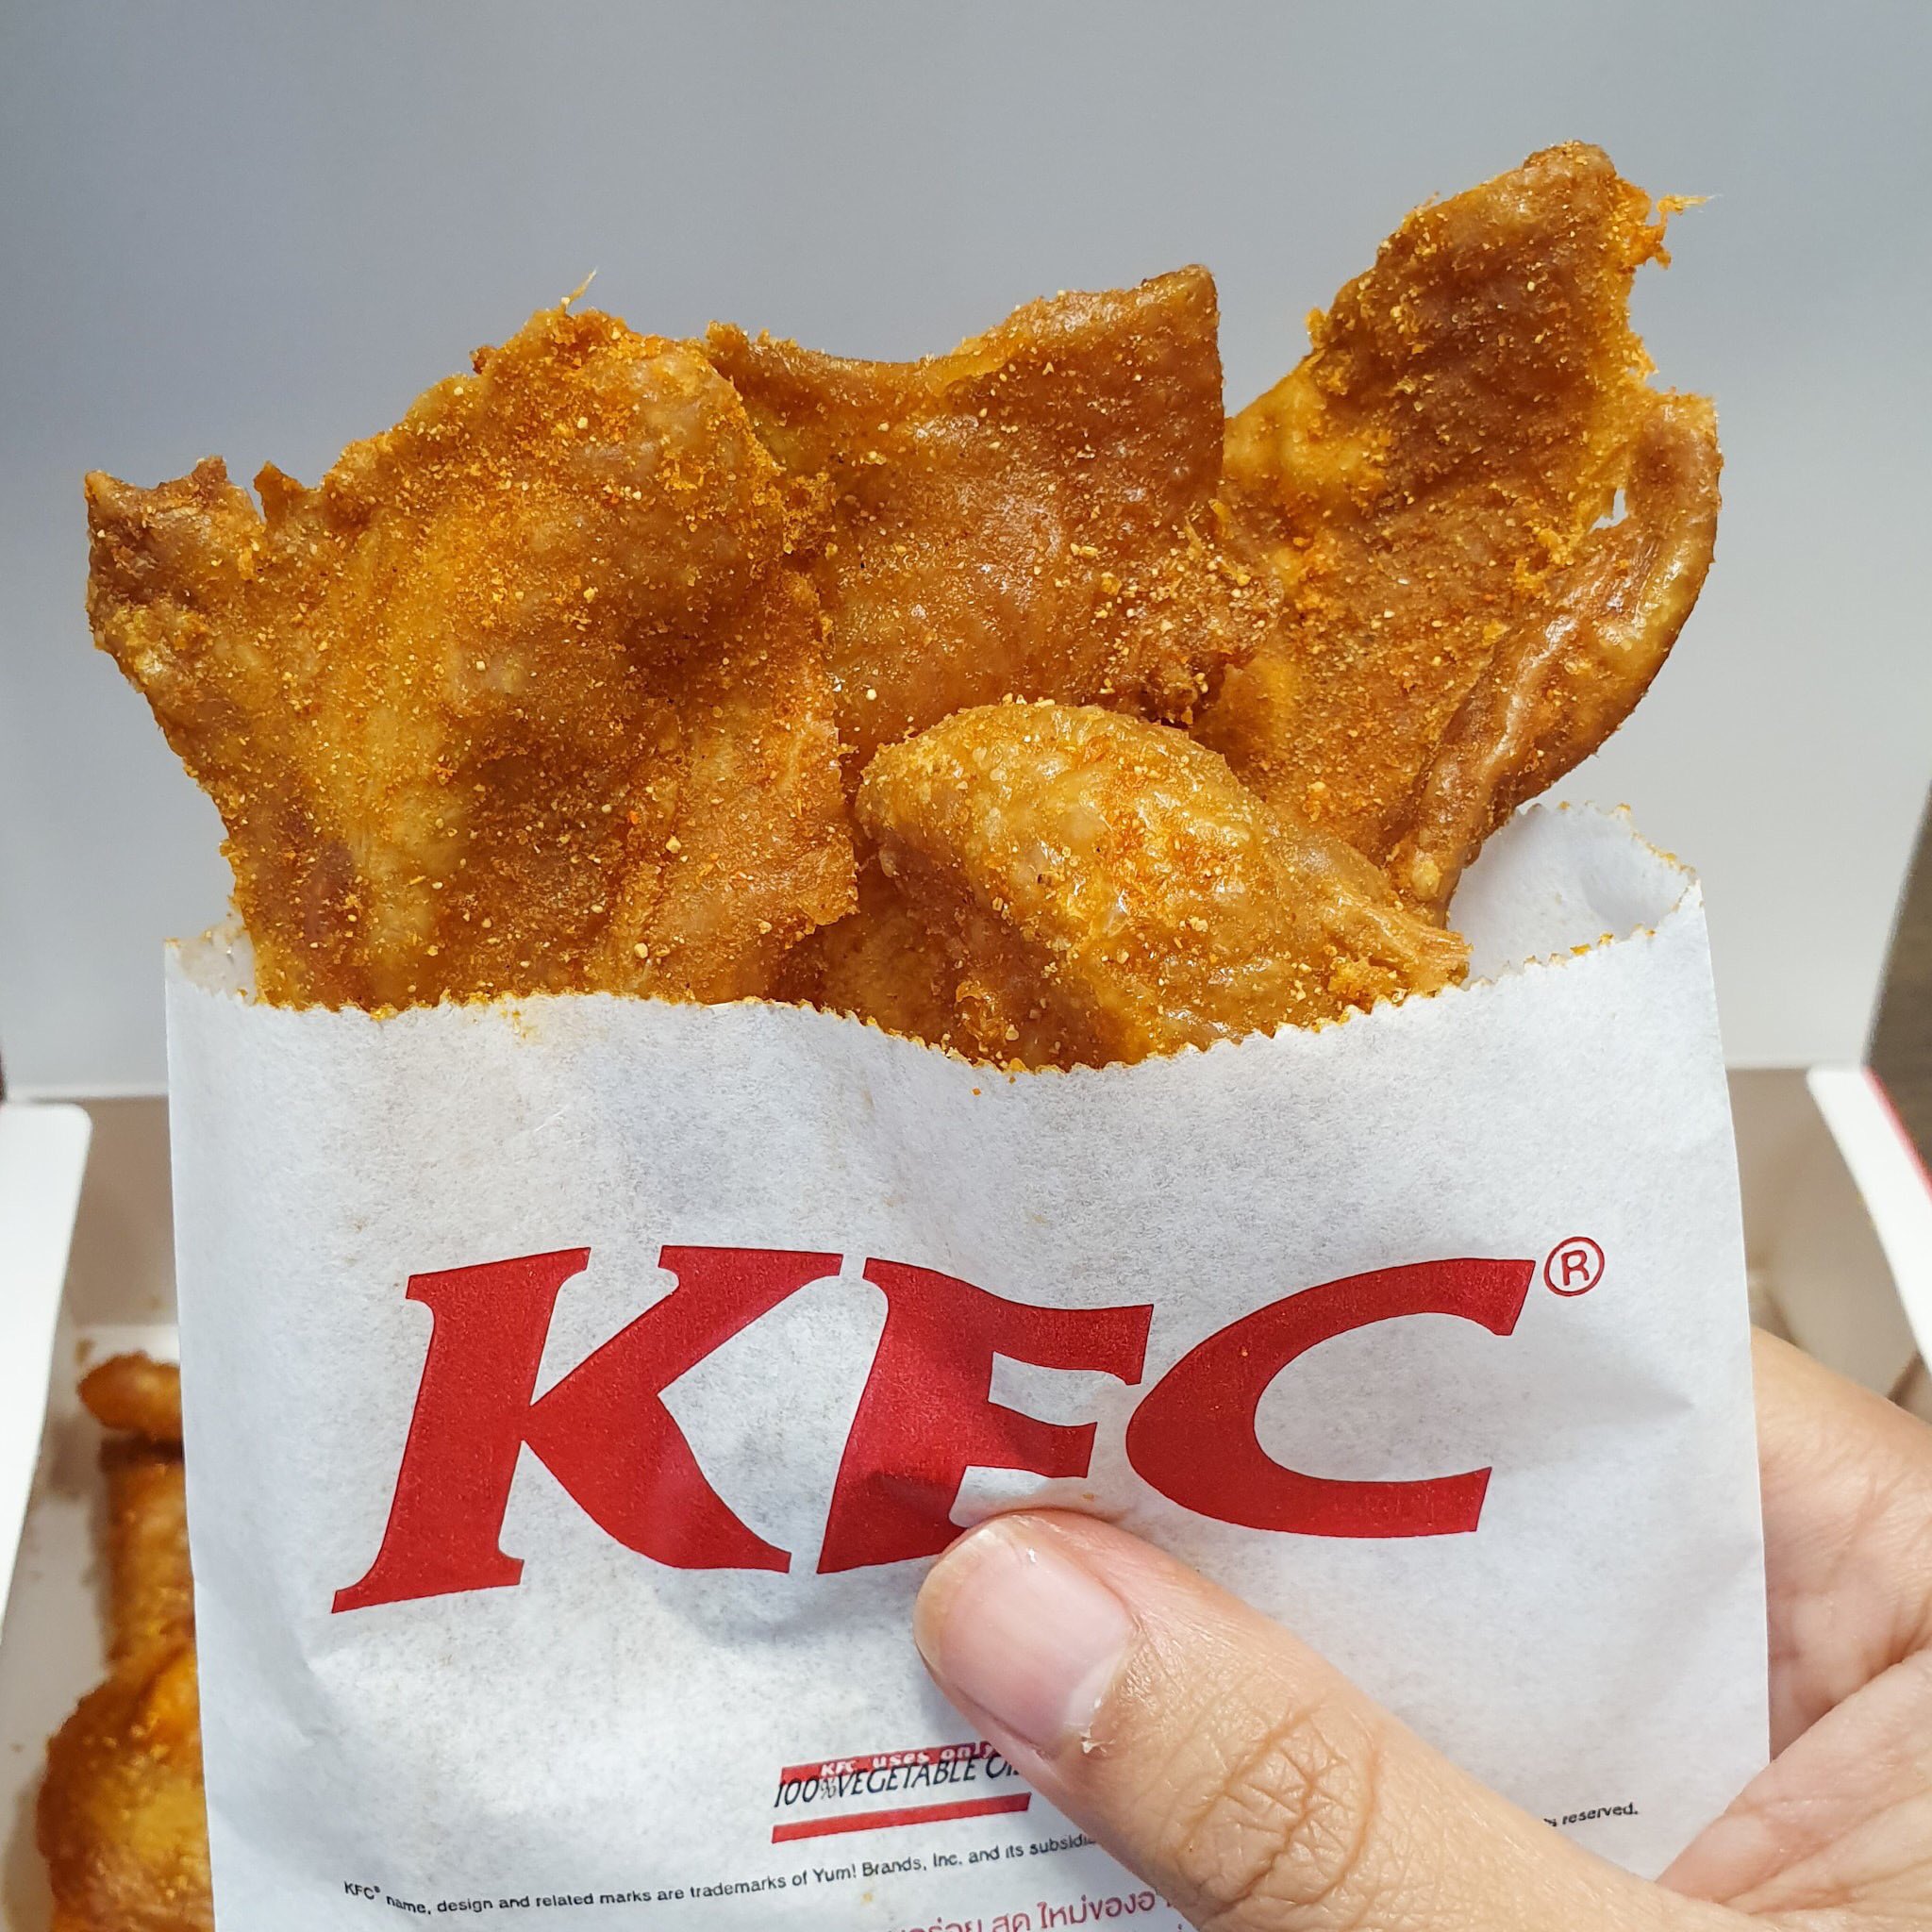 Chicken skin kfc KFC Is